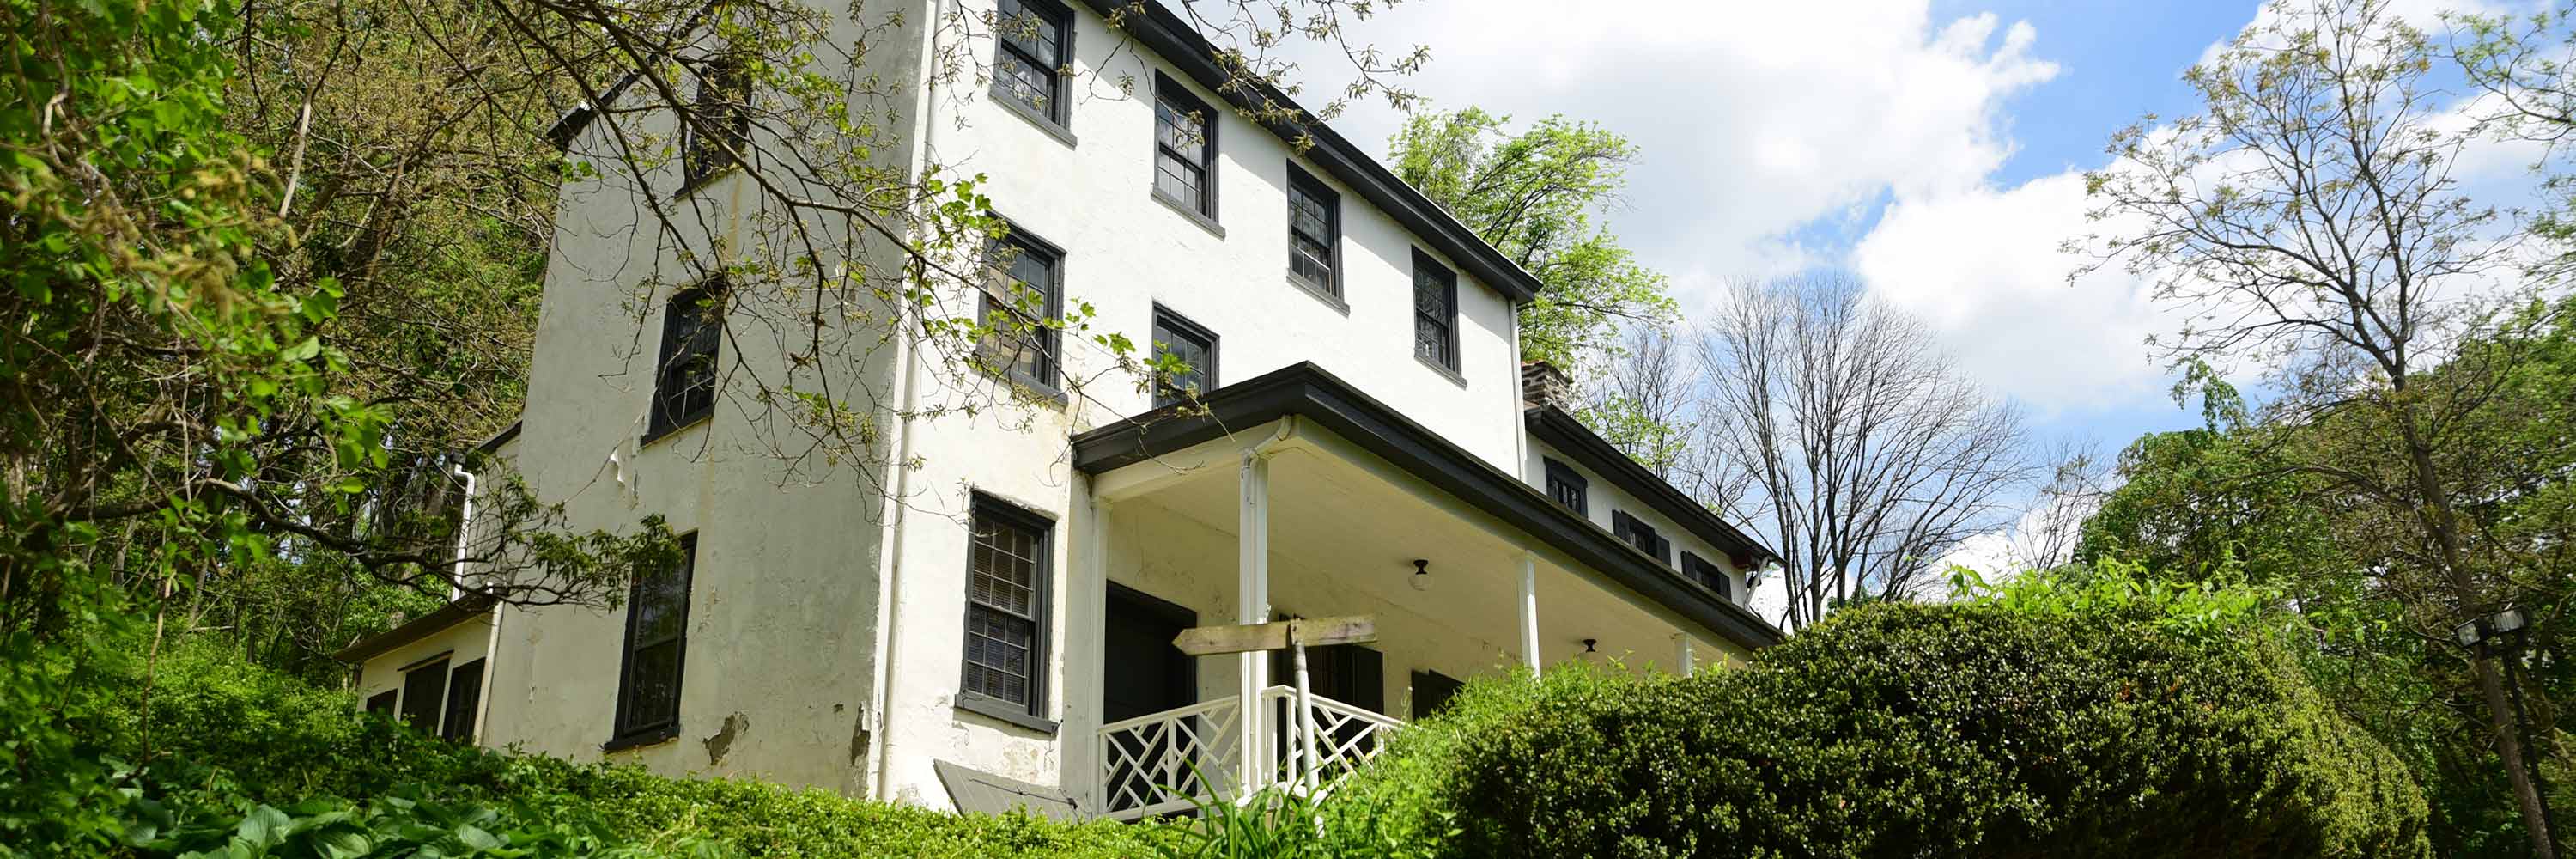 Abraham Rittenhouse Home